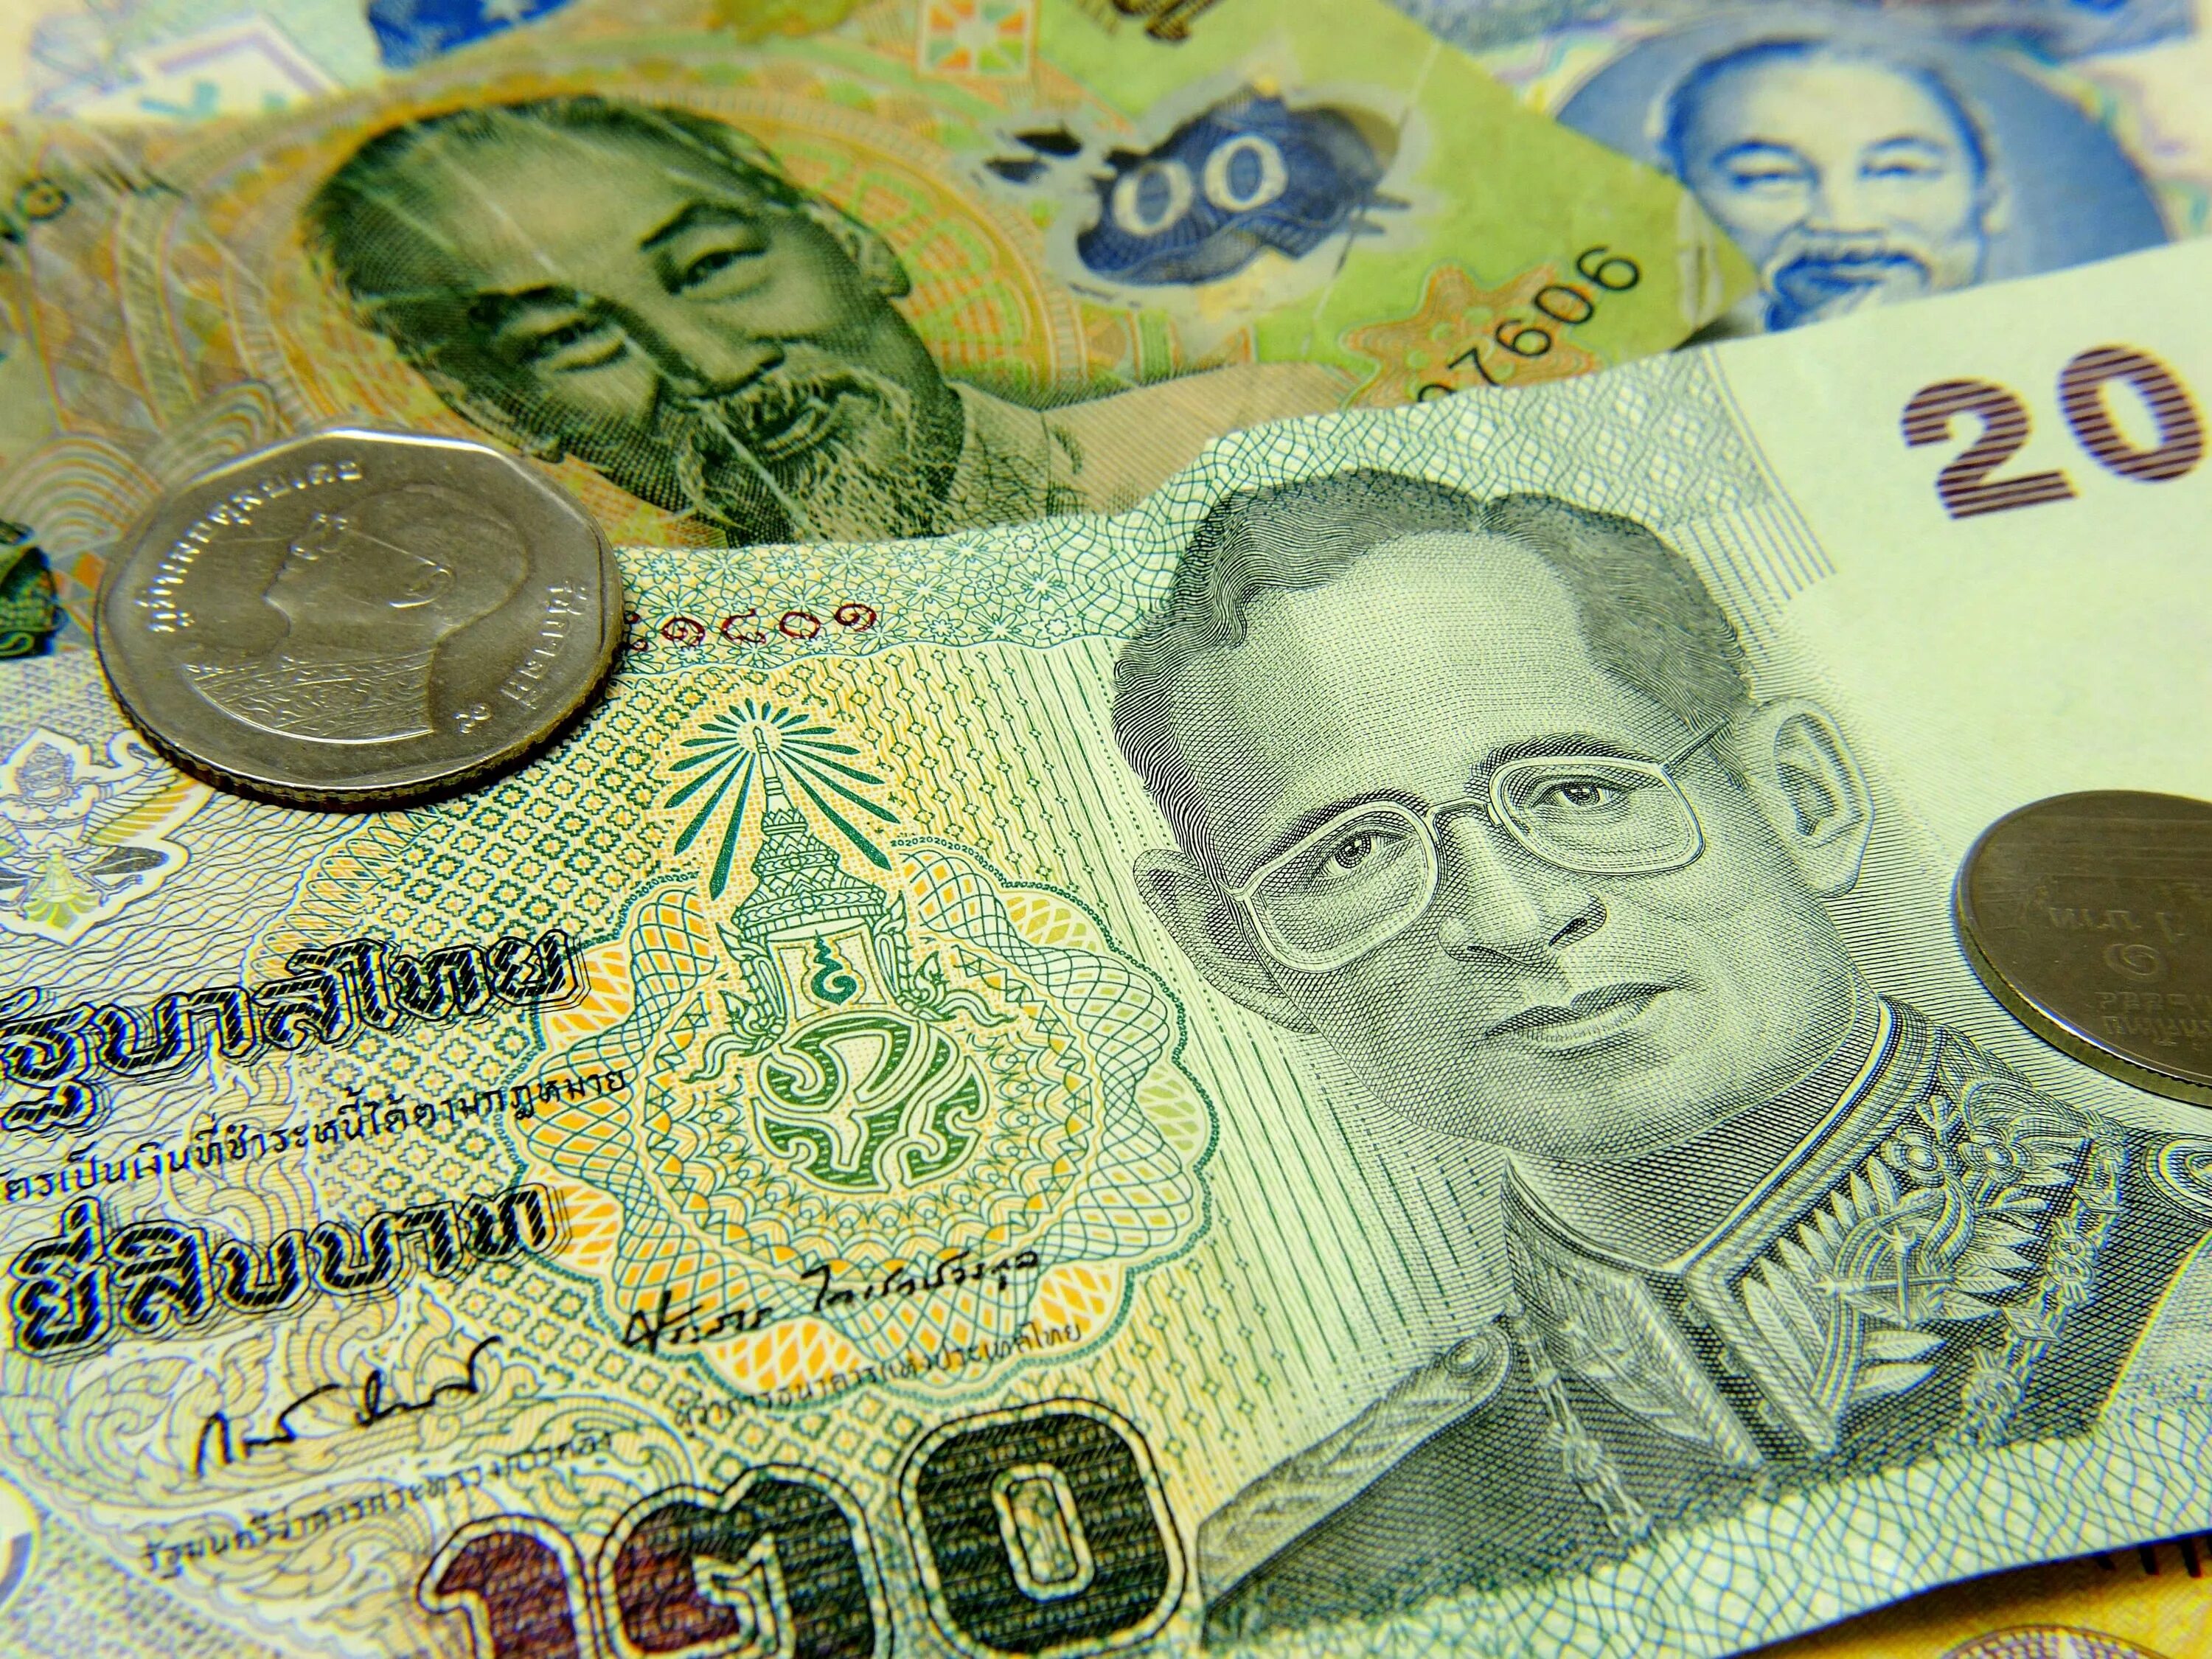 Тайланд курс к рублю. Таиланд валюта бат. Тайланд валюта тайский бат. Таиландский бат купюры. Купюры баты Таиланд.